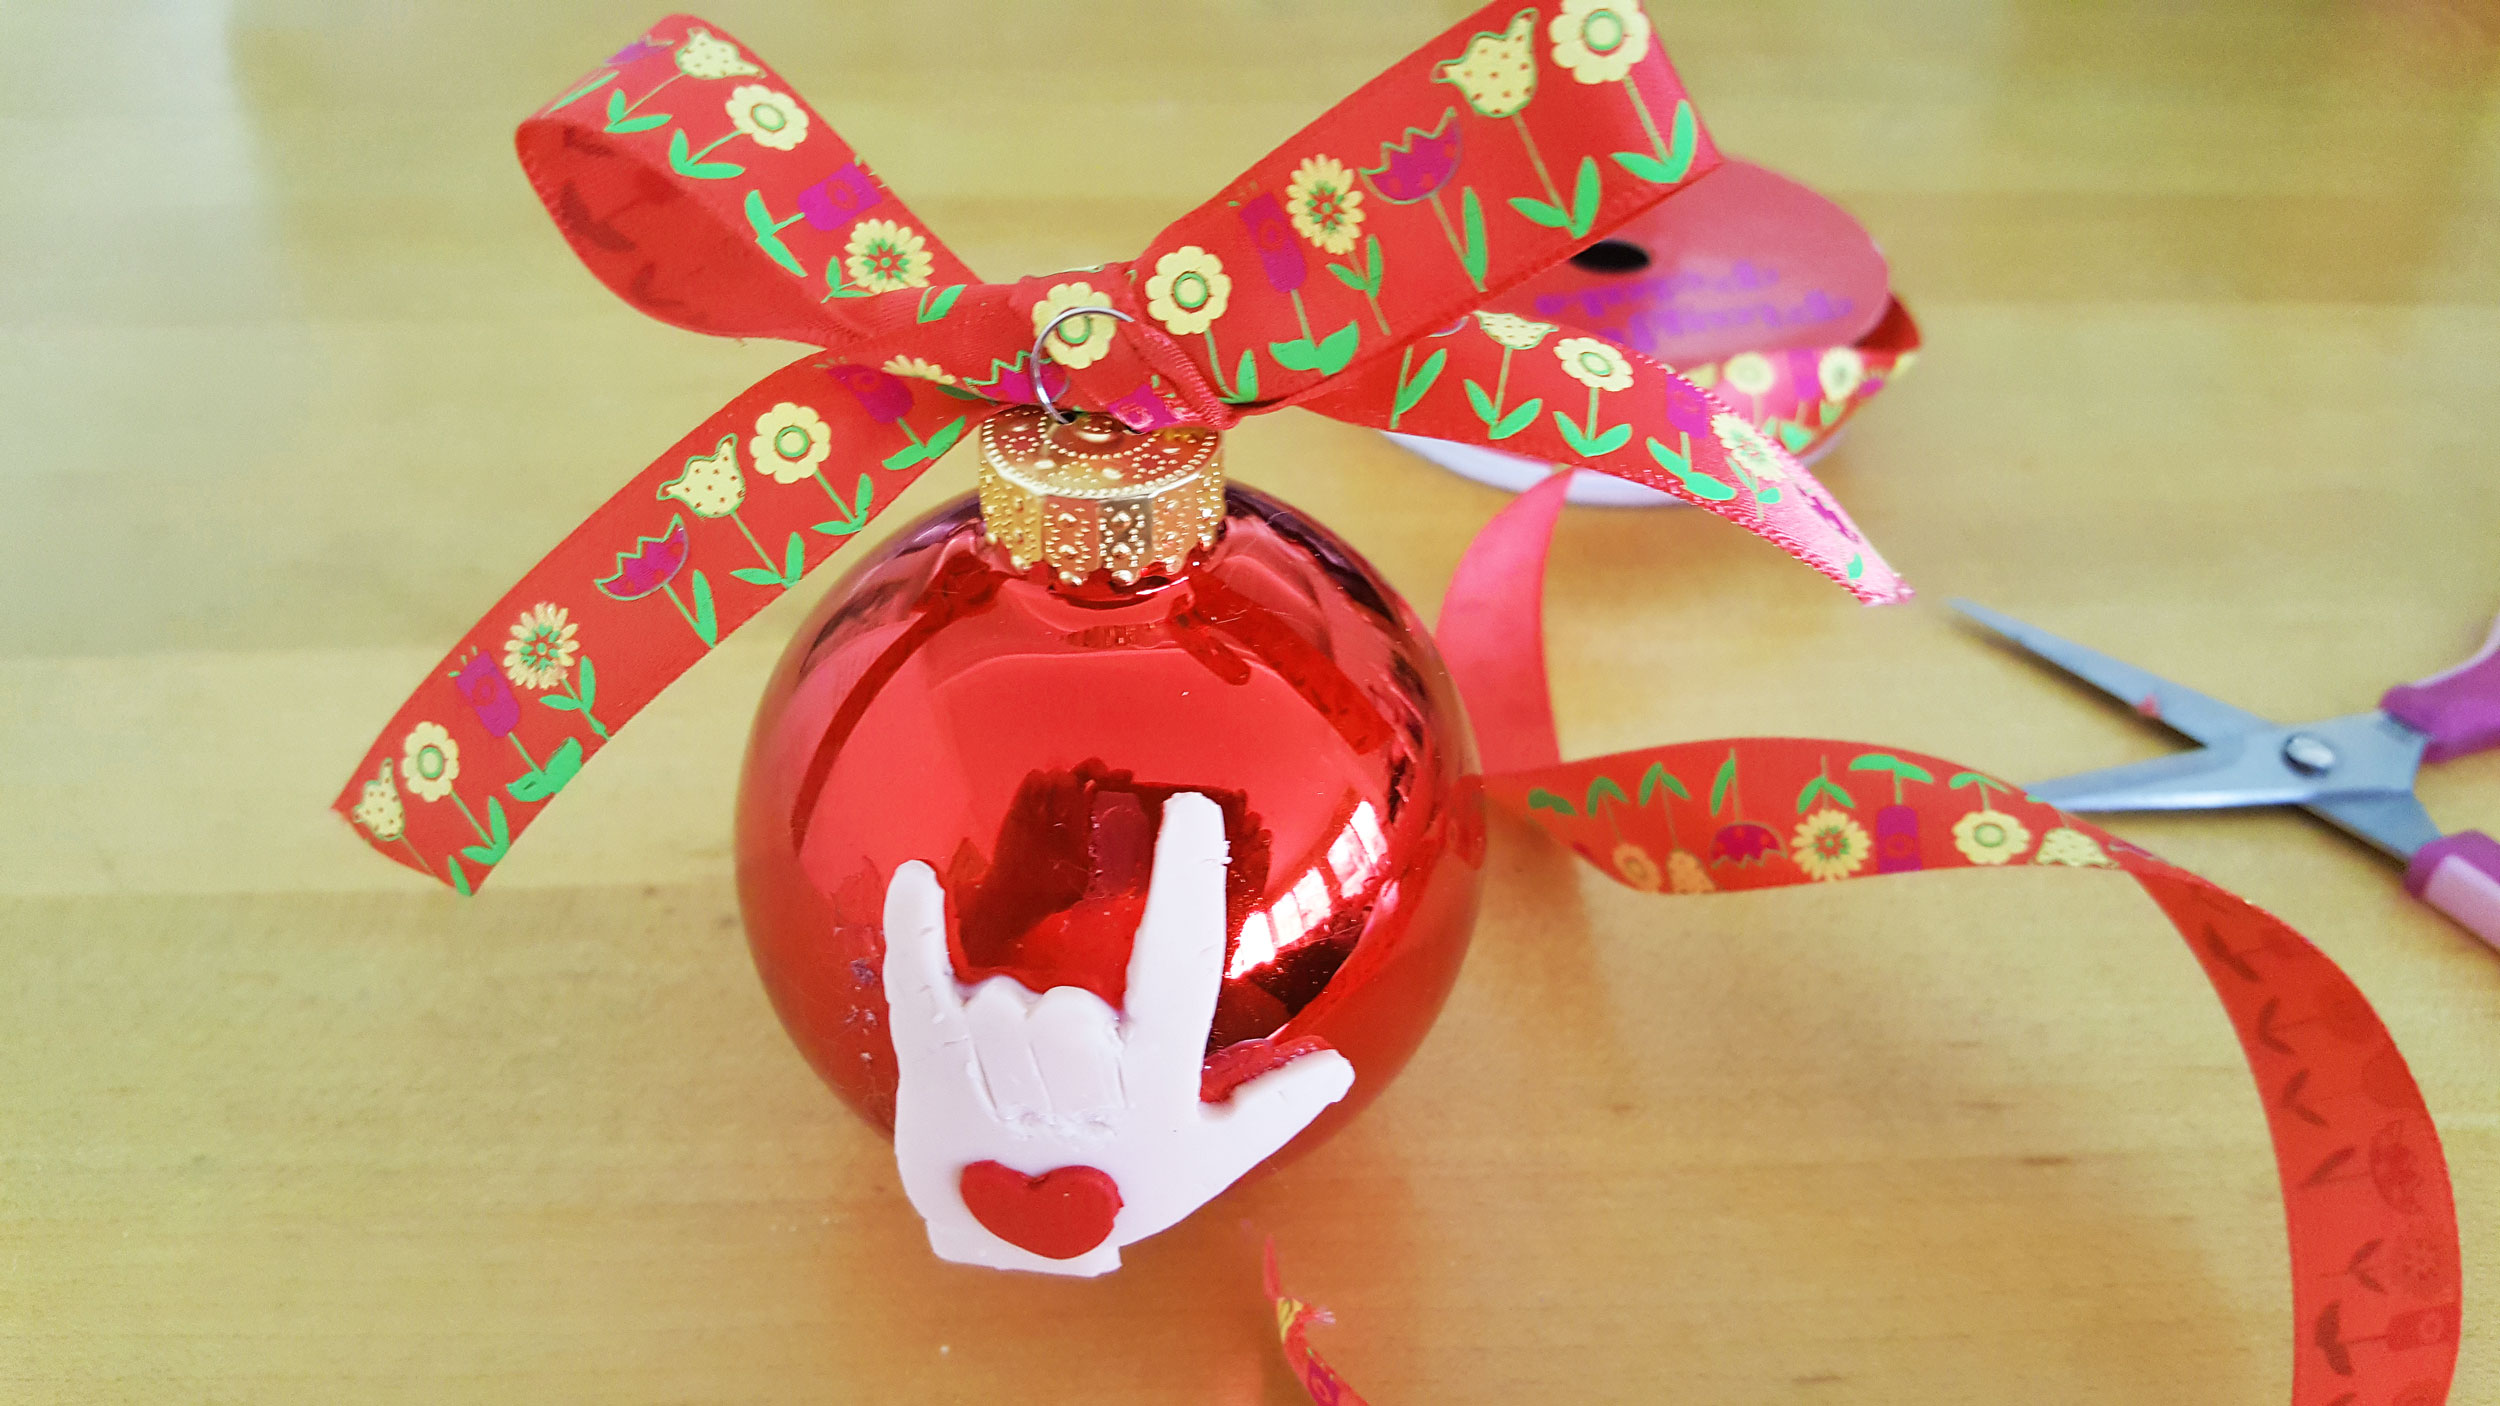 Ribbon tied on red glass ball ornament | OrnamentShop.com